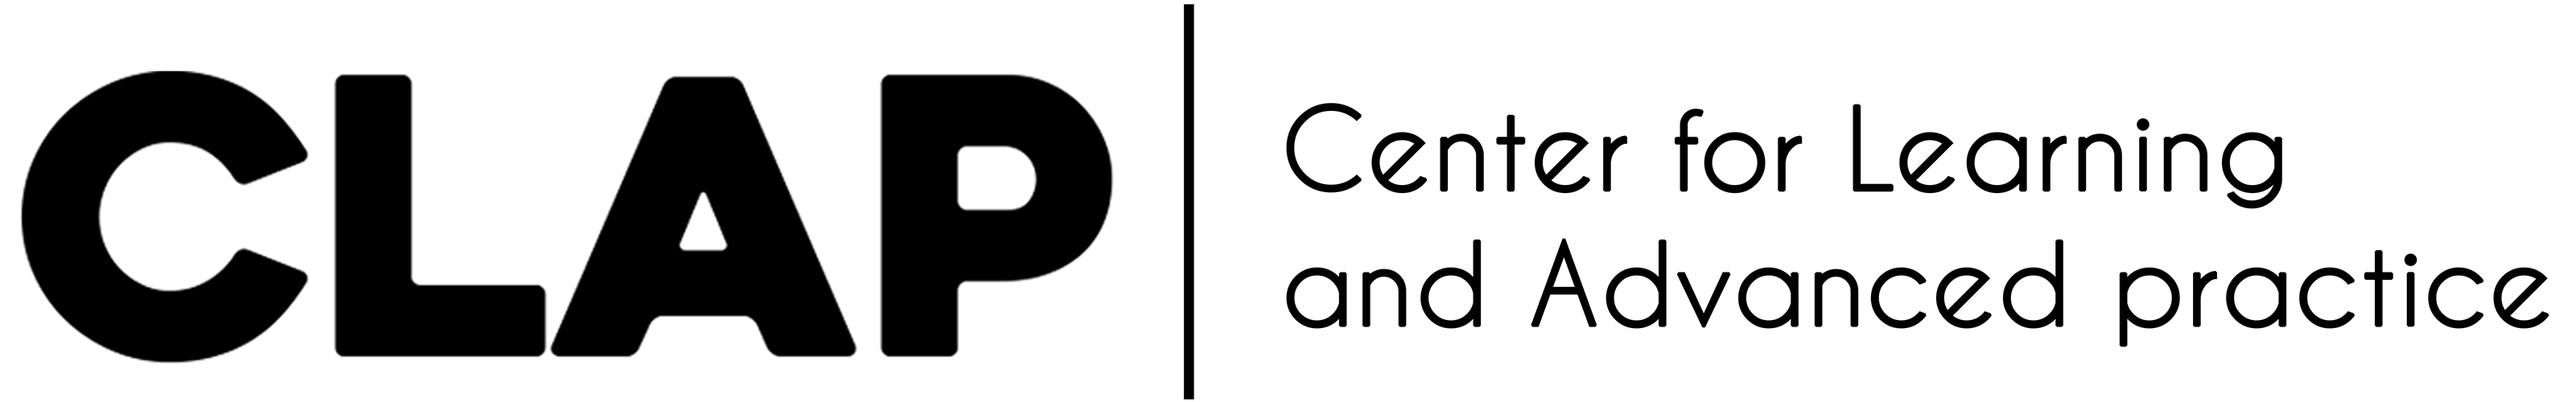 clapisp-logo